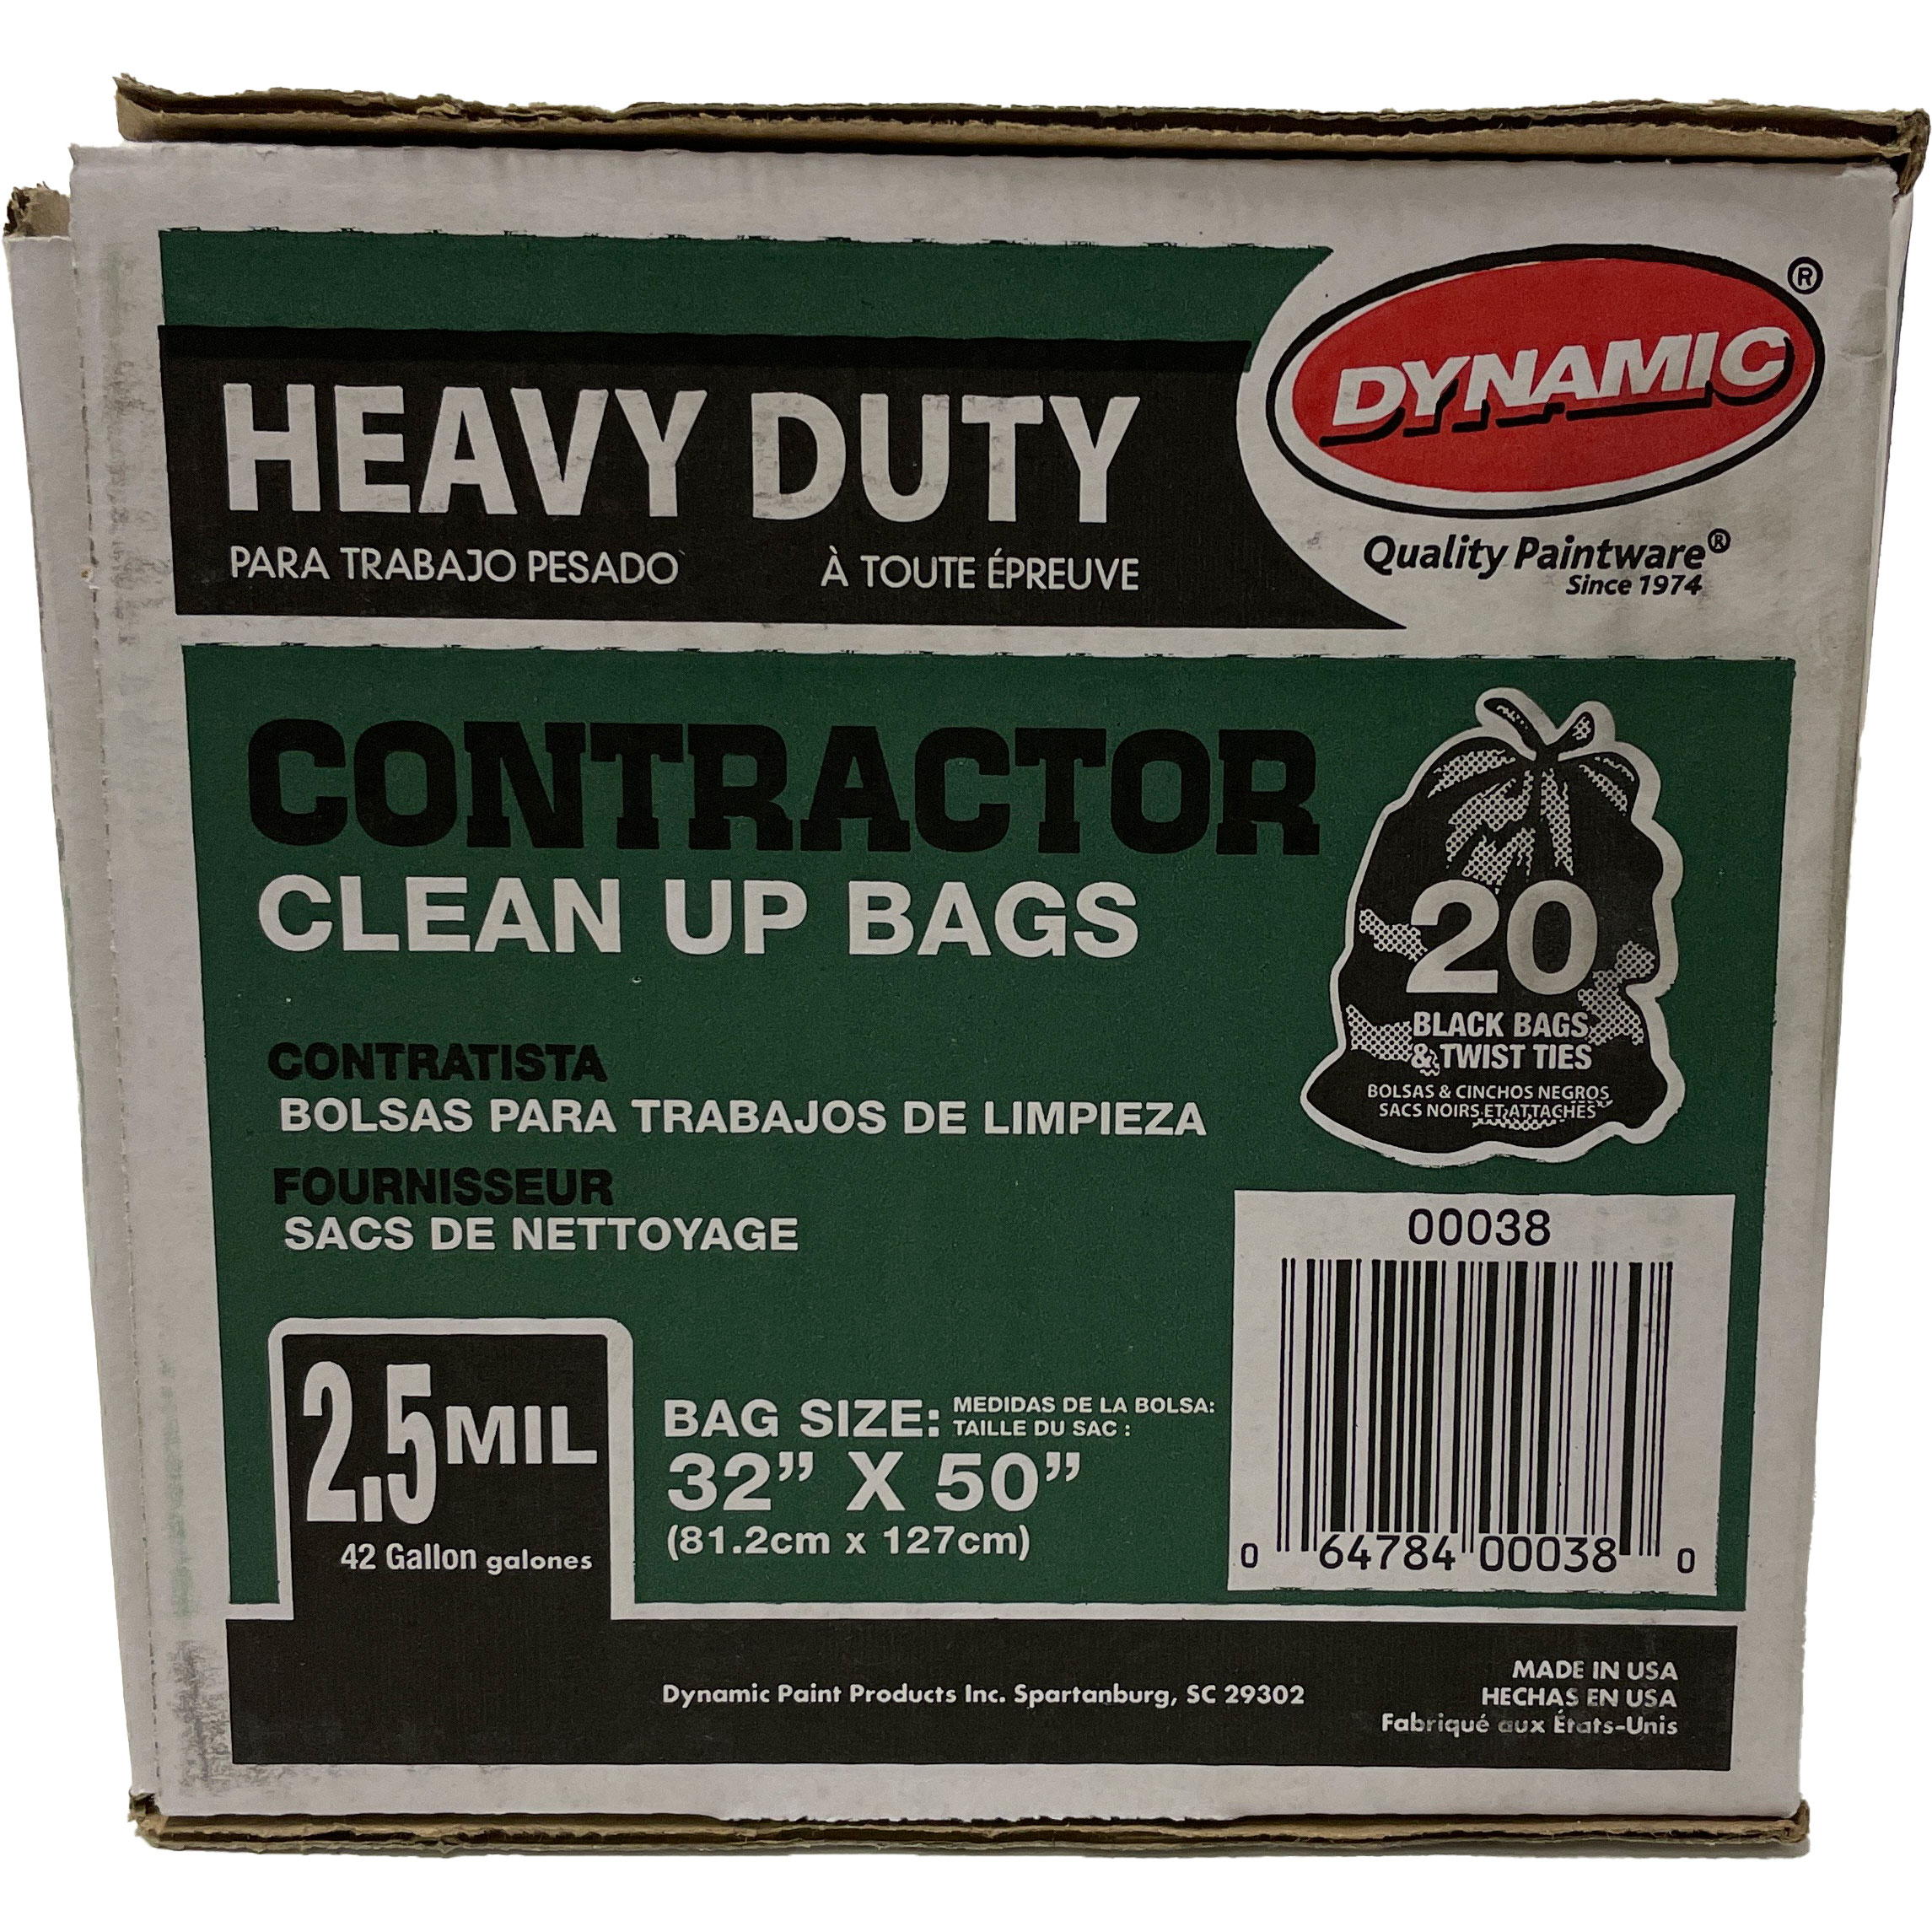 Dynamic 00038 Heavy Duty Black Contractor Bags, 42 Gallon, 2.5mil, 32" x 50", 20 Bags w/ Twist Ties